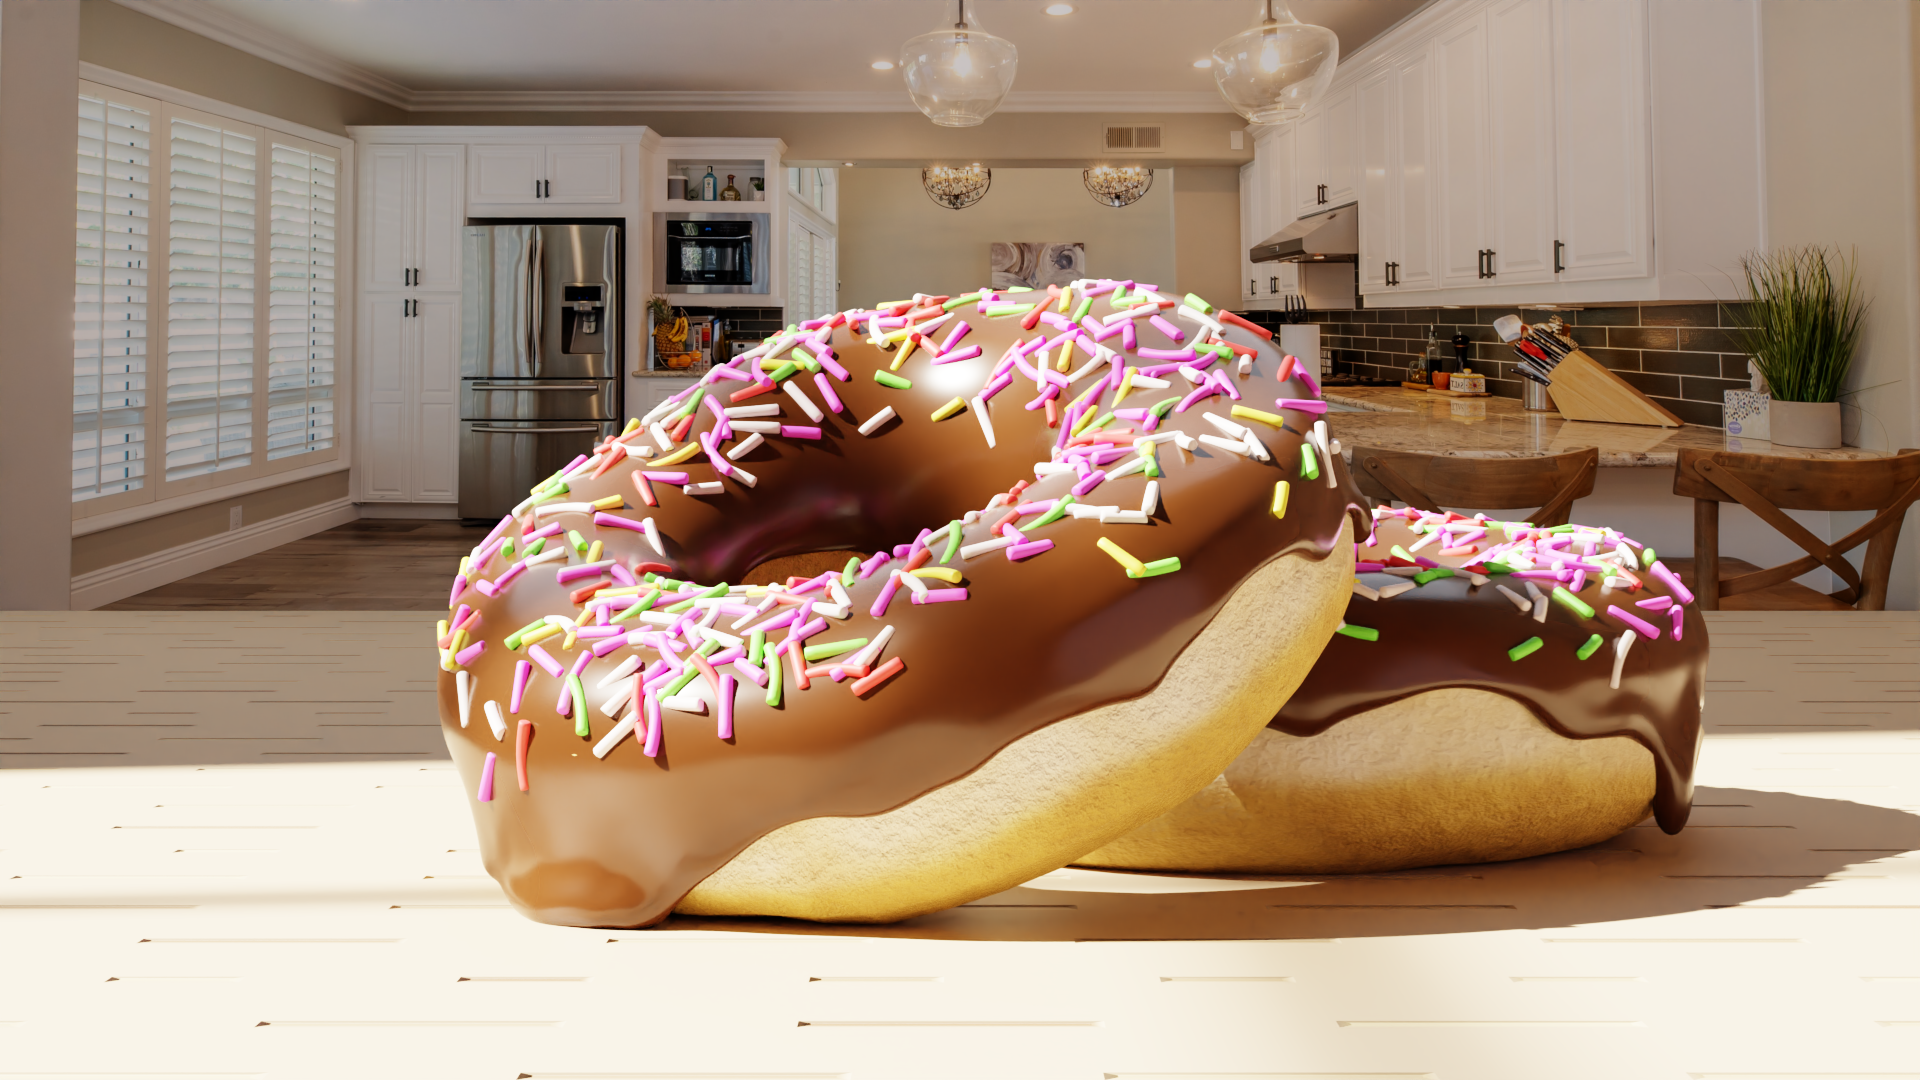 Donut CGi Digital Art Blender Sprinkles Chocolate Kitchen Food Sweets Interior Closeup 1920x1080